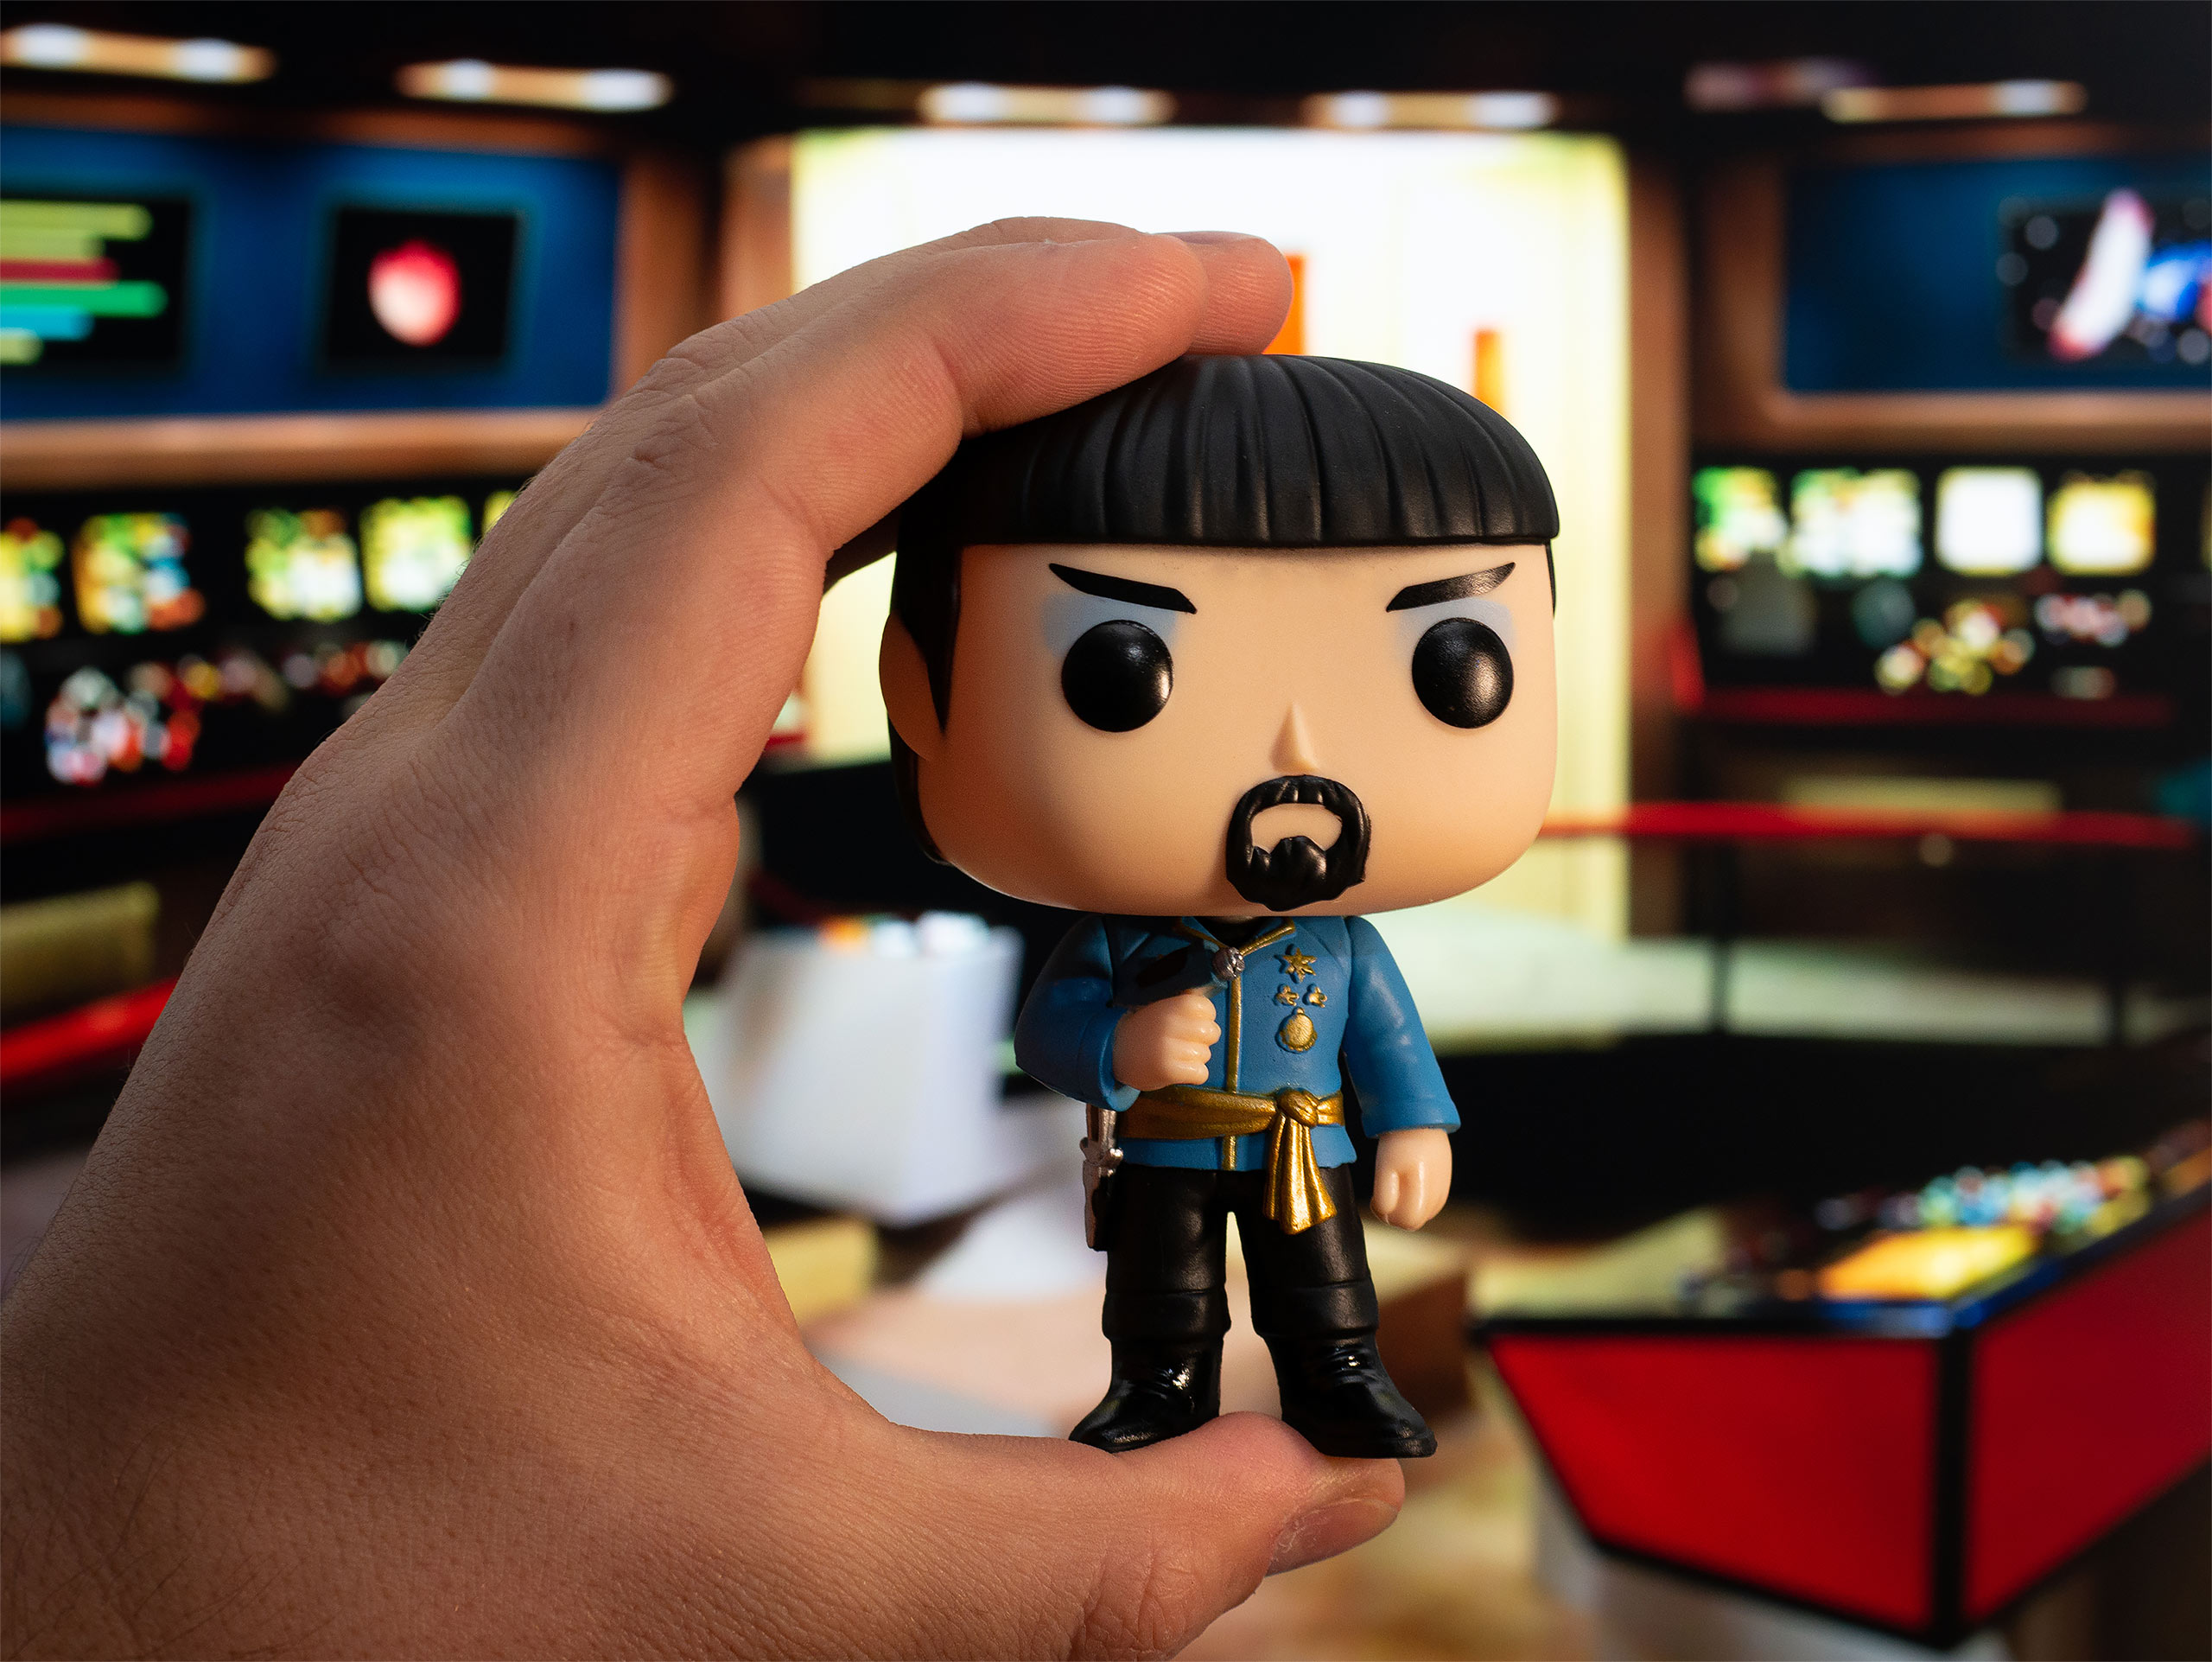 Star Trek - Spock Funko Pop Figur